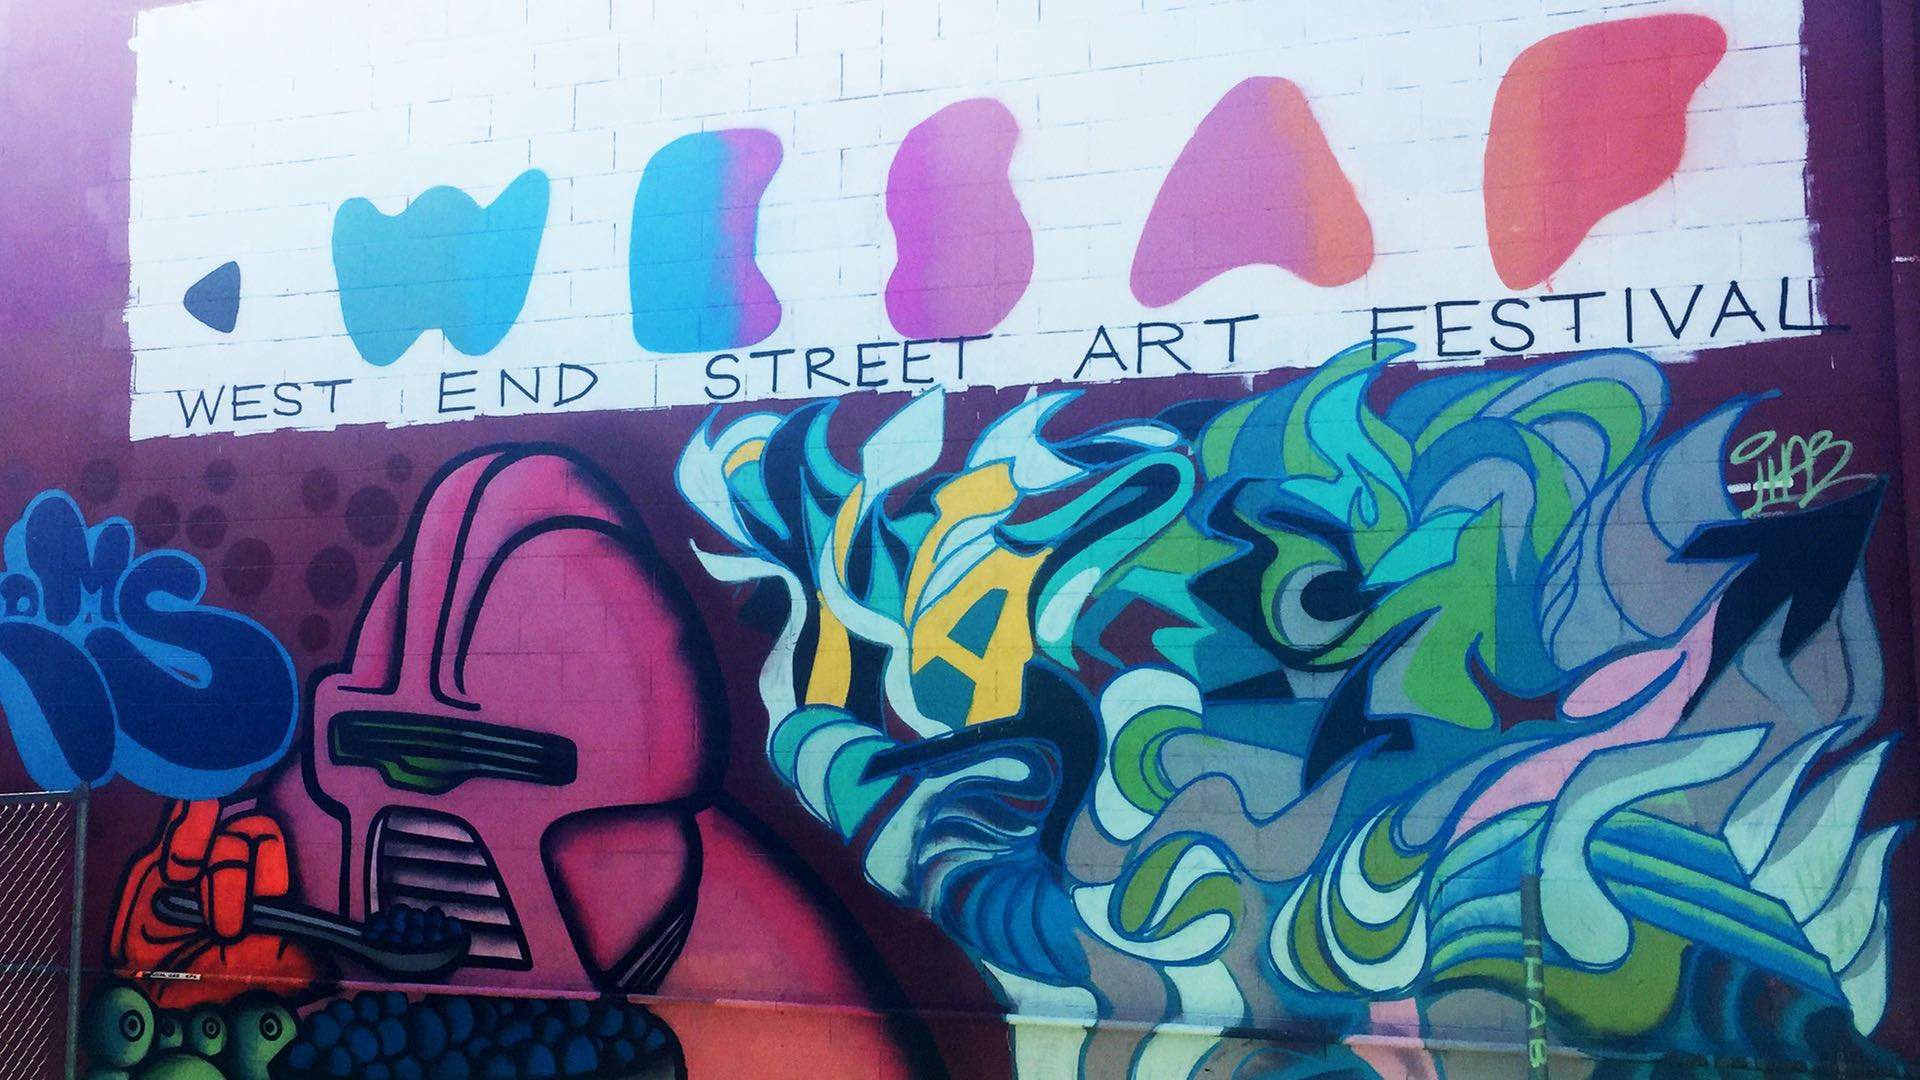 West End Street Art Festival